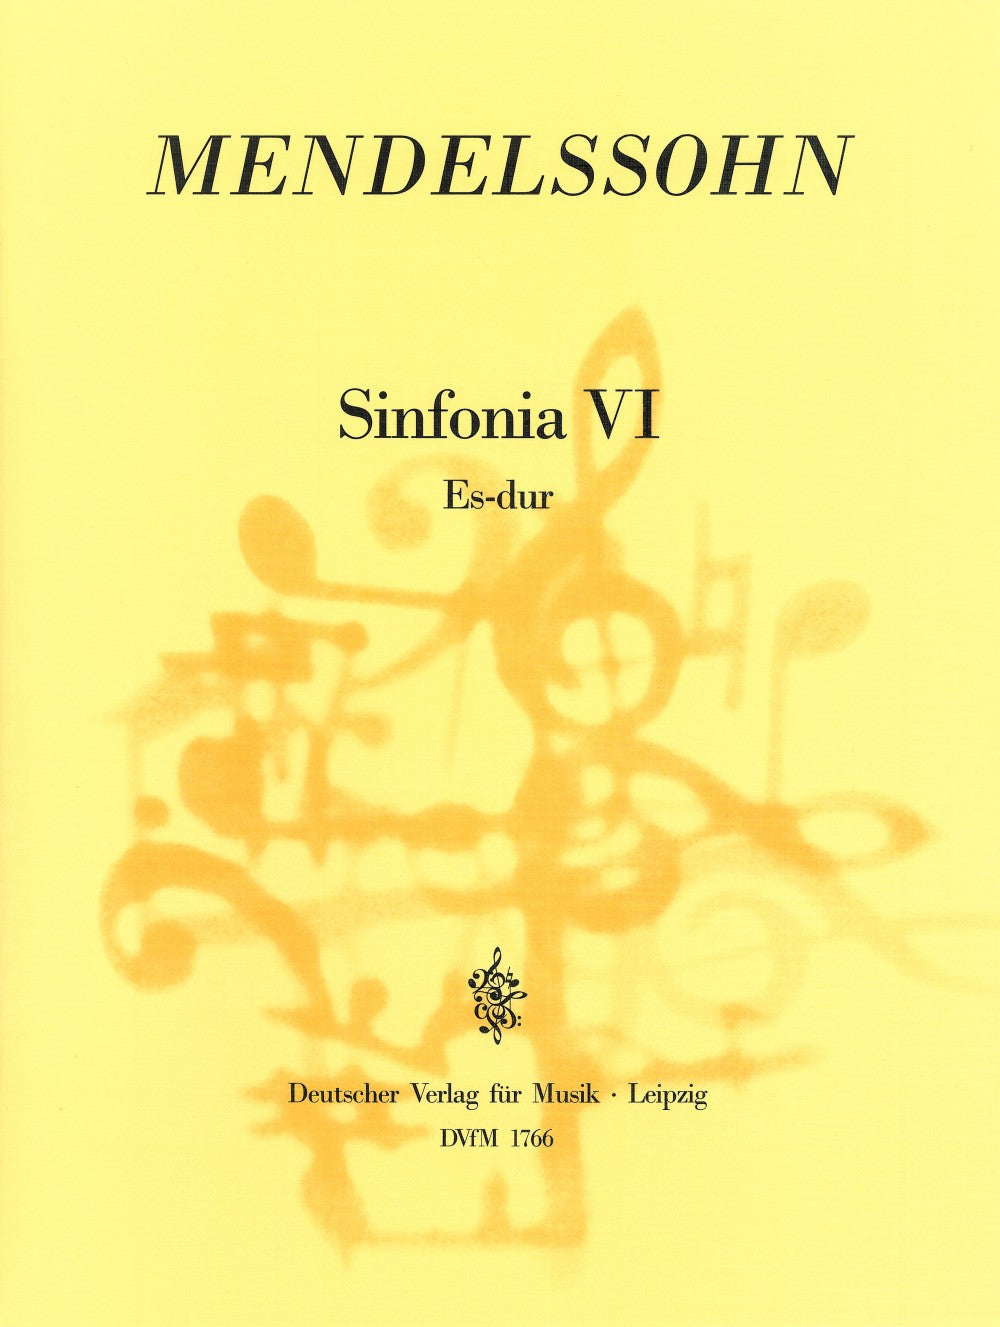 Mendelssohn: Sinfonia No. 6 in E-flat Major, MWV N 6